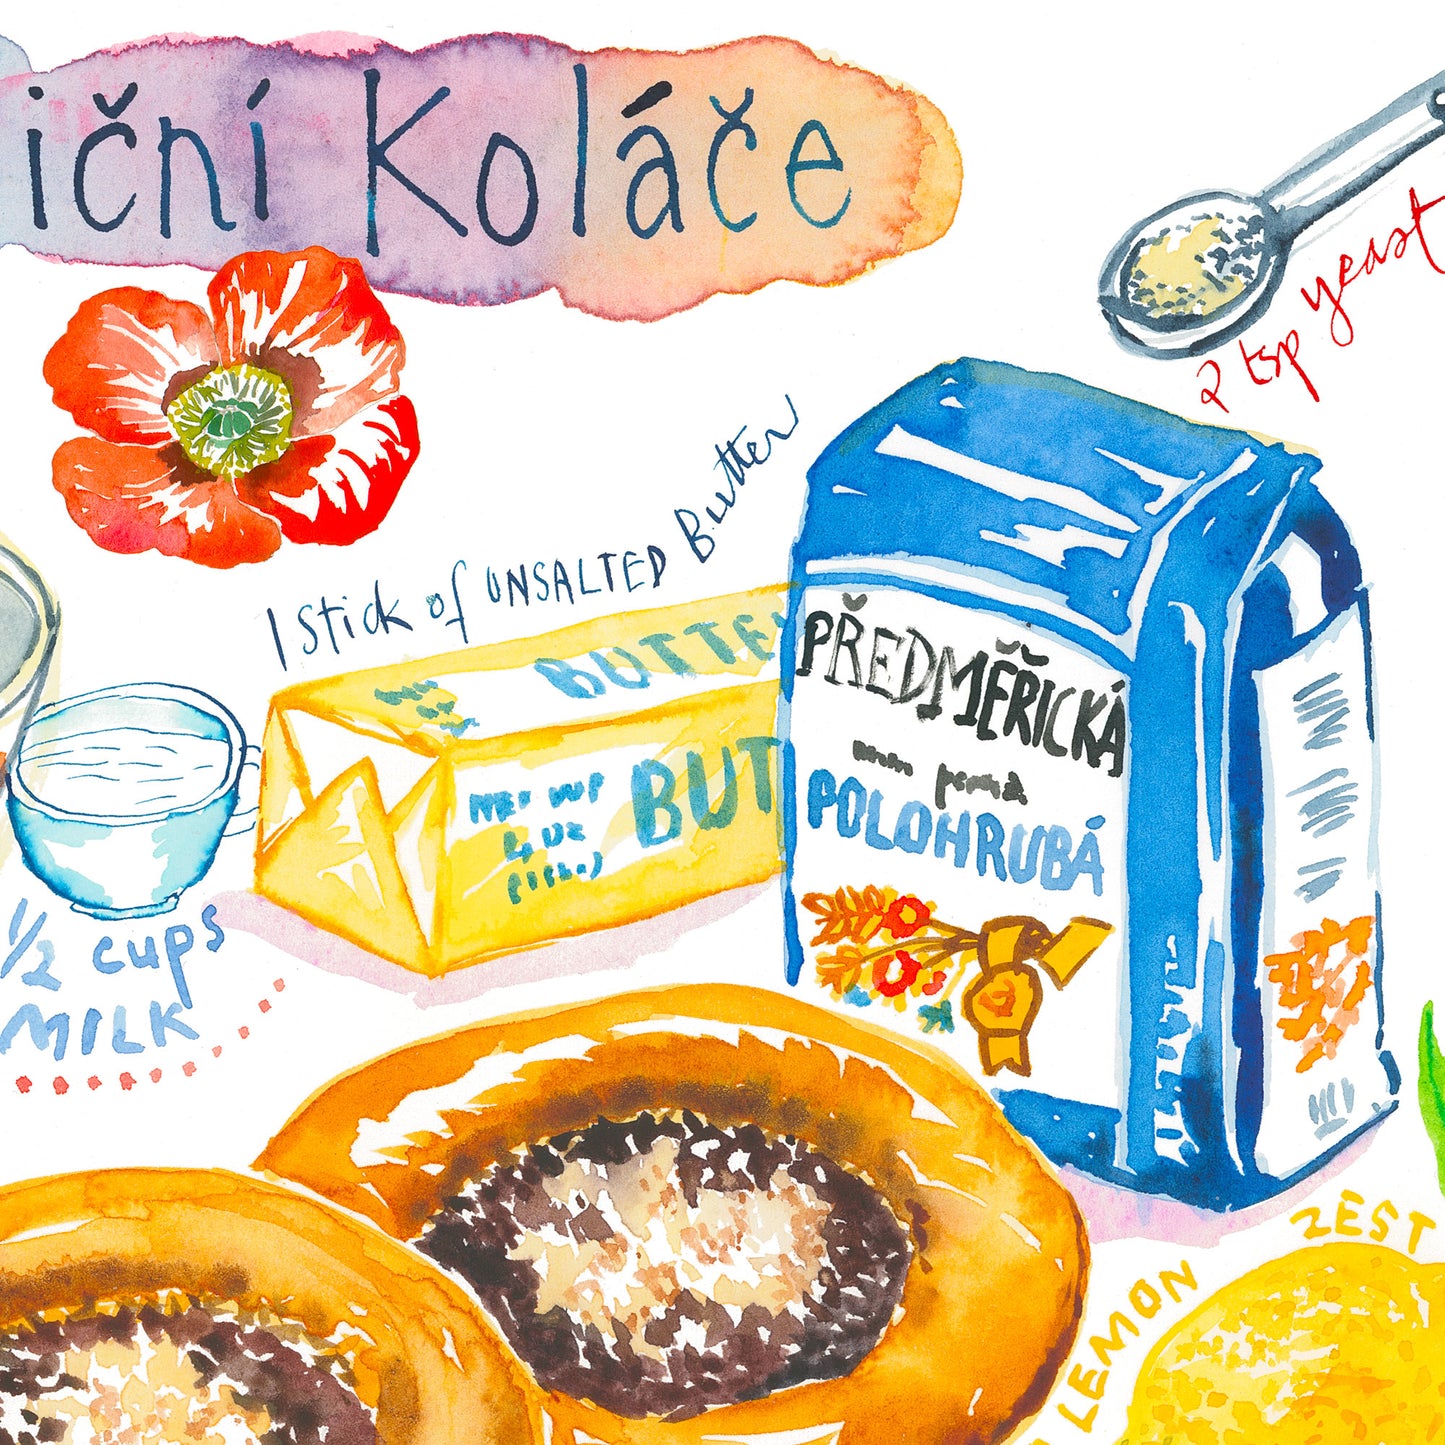 Czech Kolache recipe